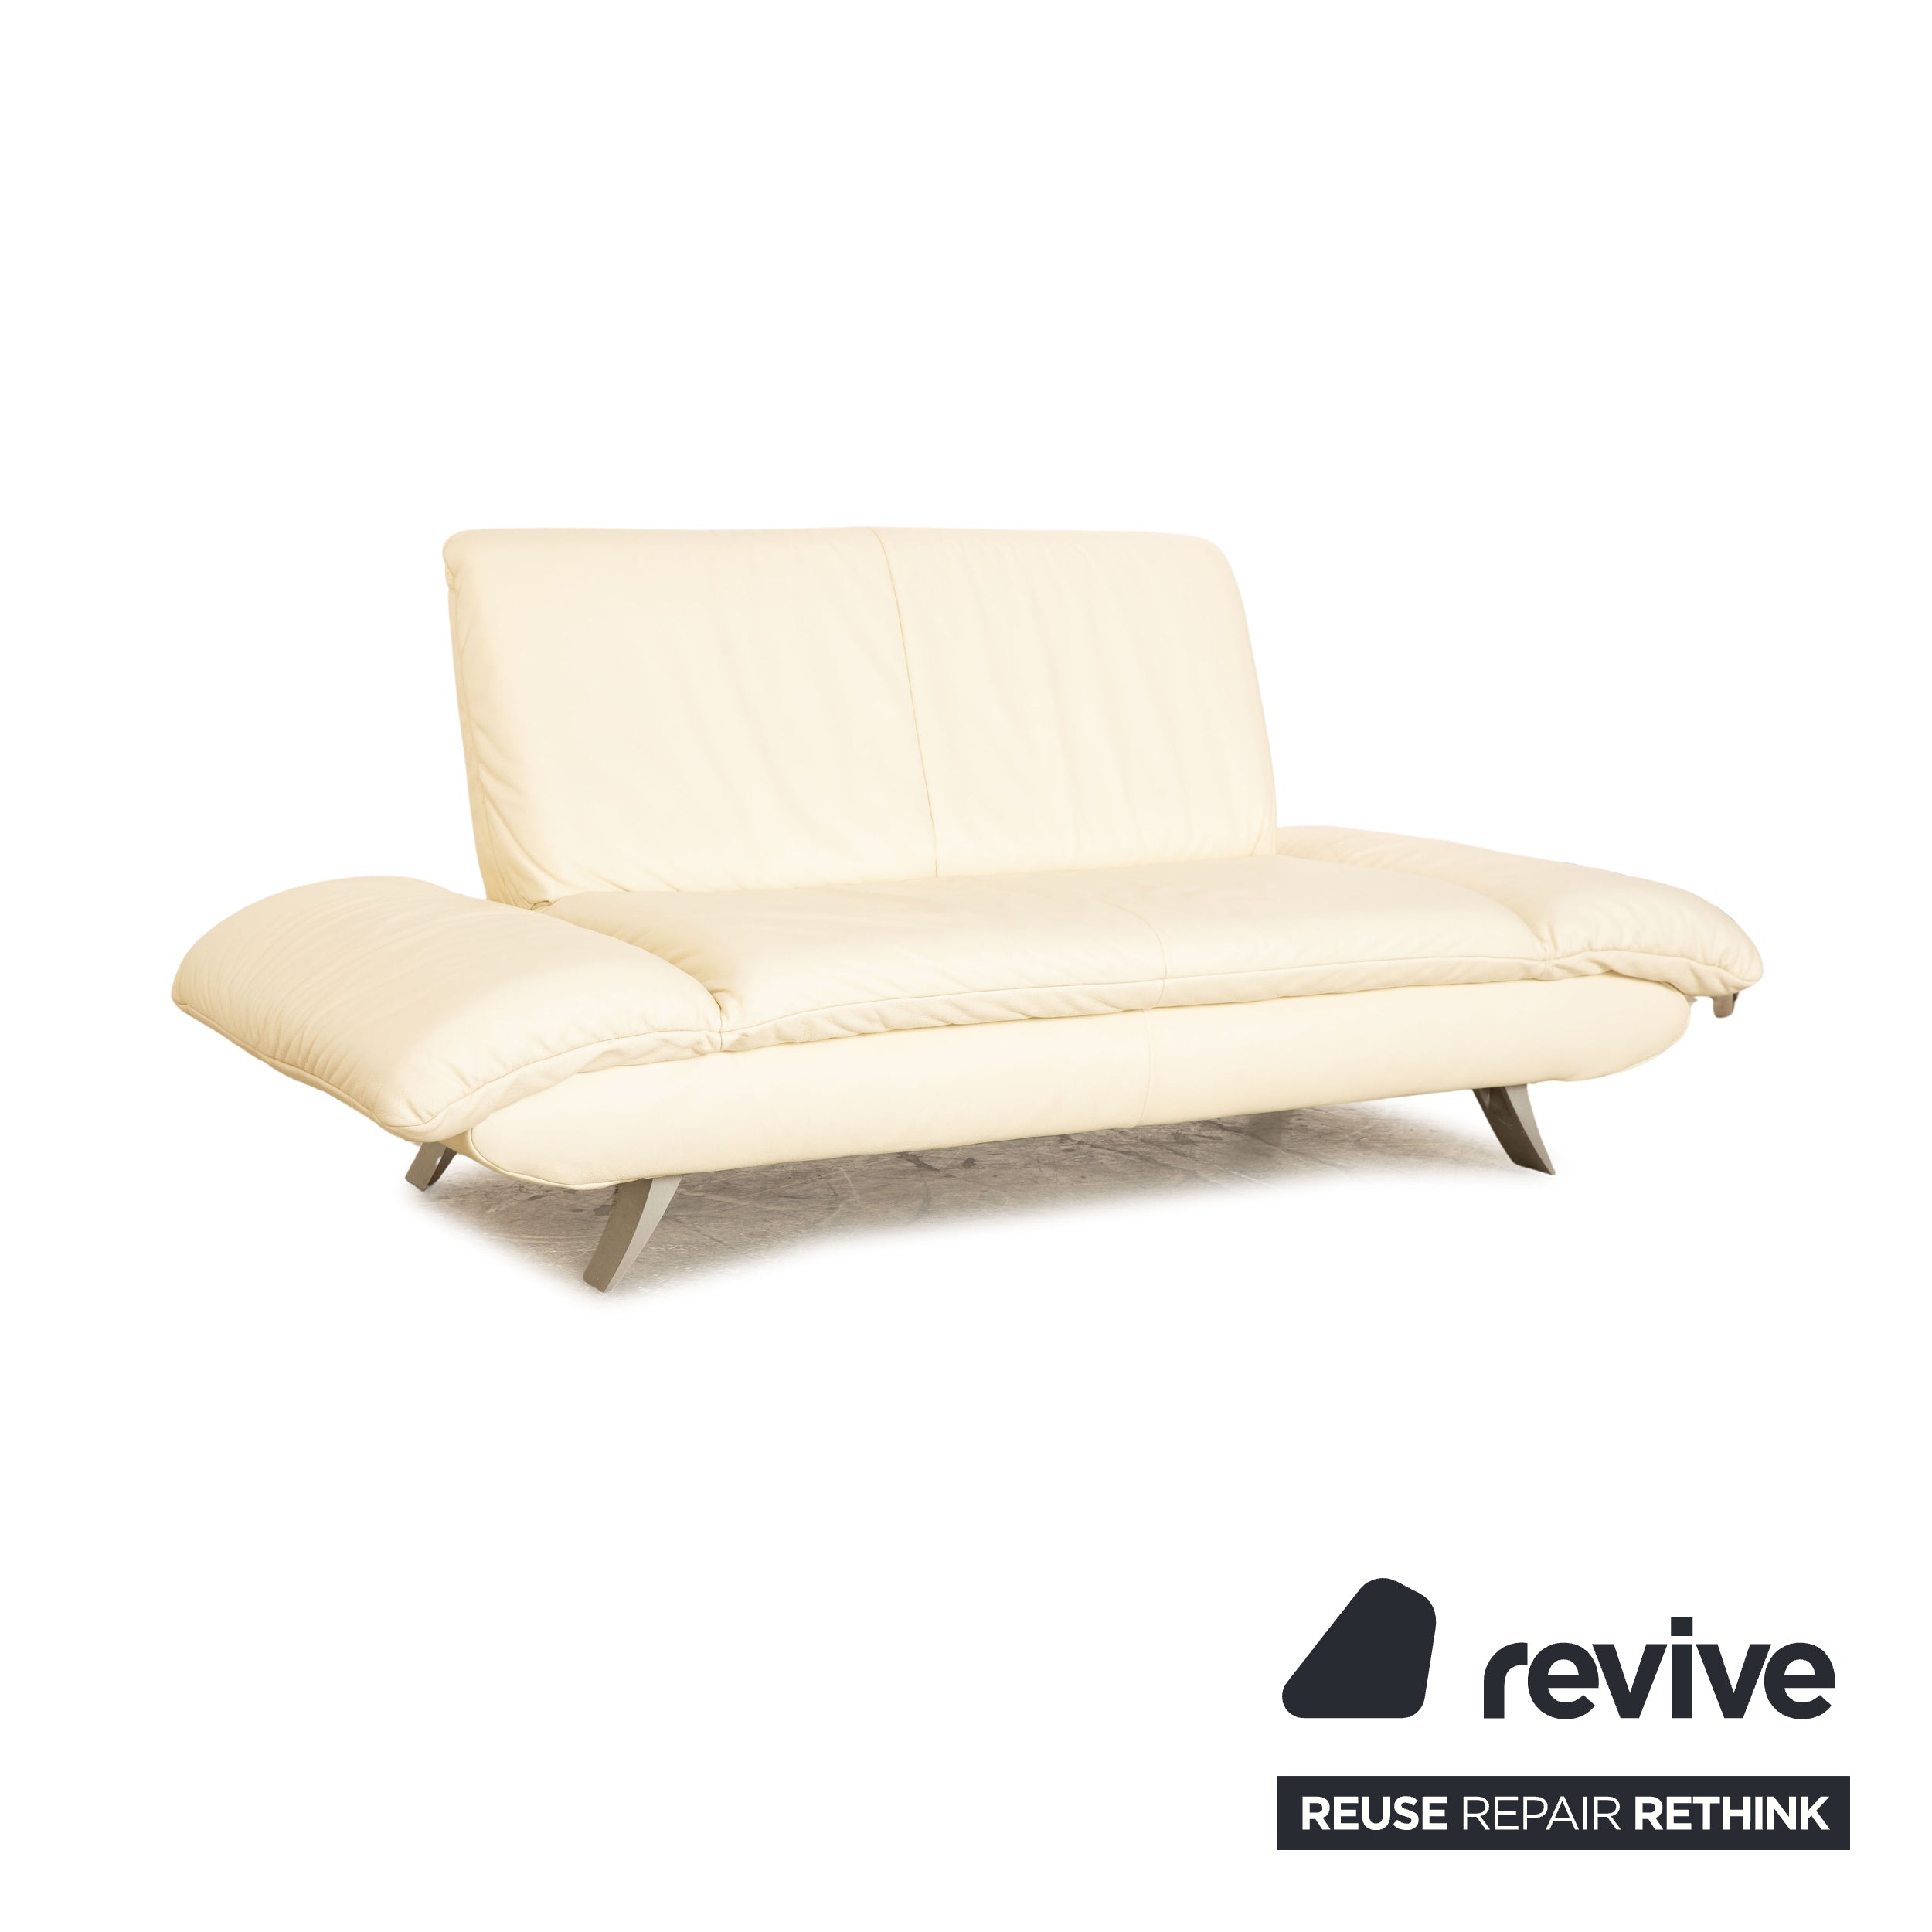 Koinor Rossini Leder Sofa Garnitur Creme manuelle Funktion Zweisitzer Hocker Couch